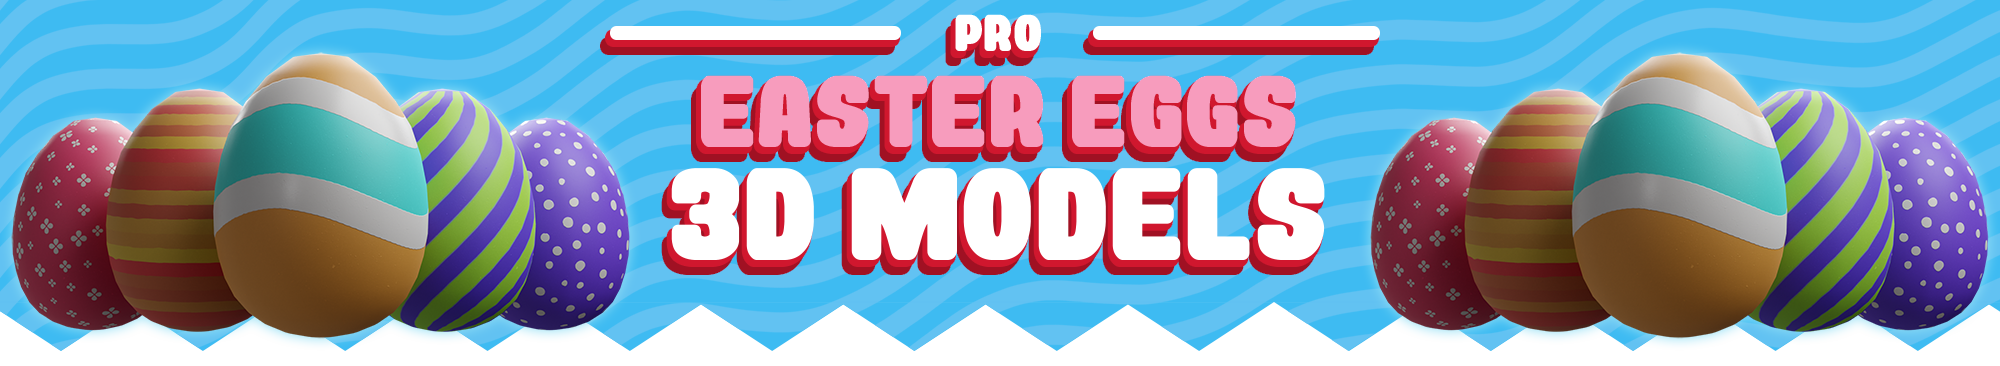 Easter Eggs 3D Models PRO